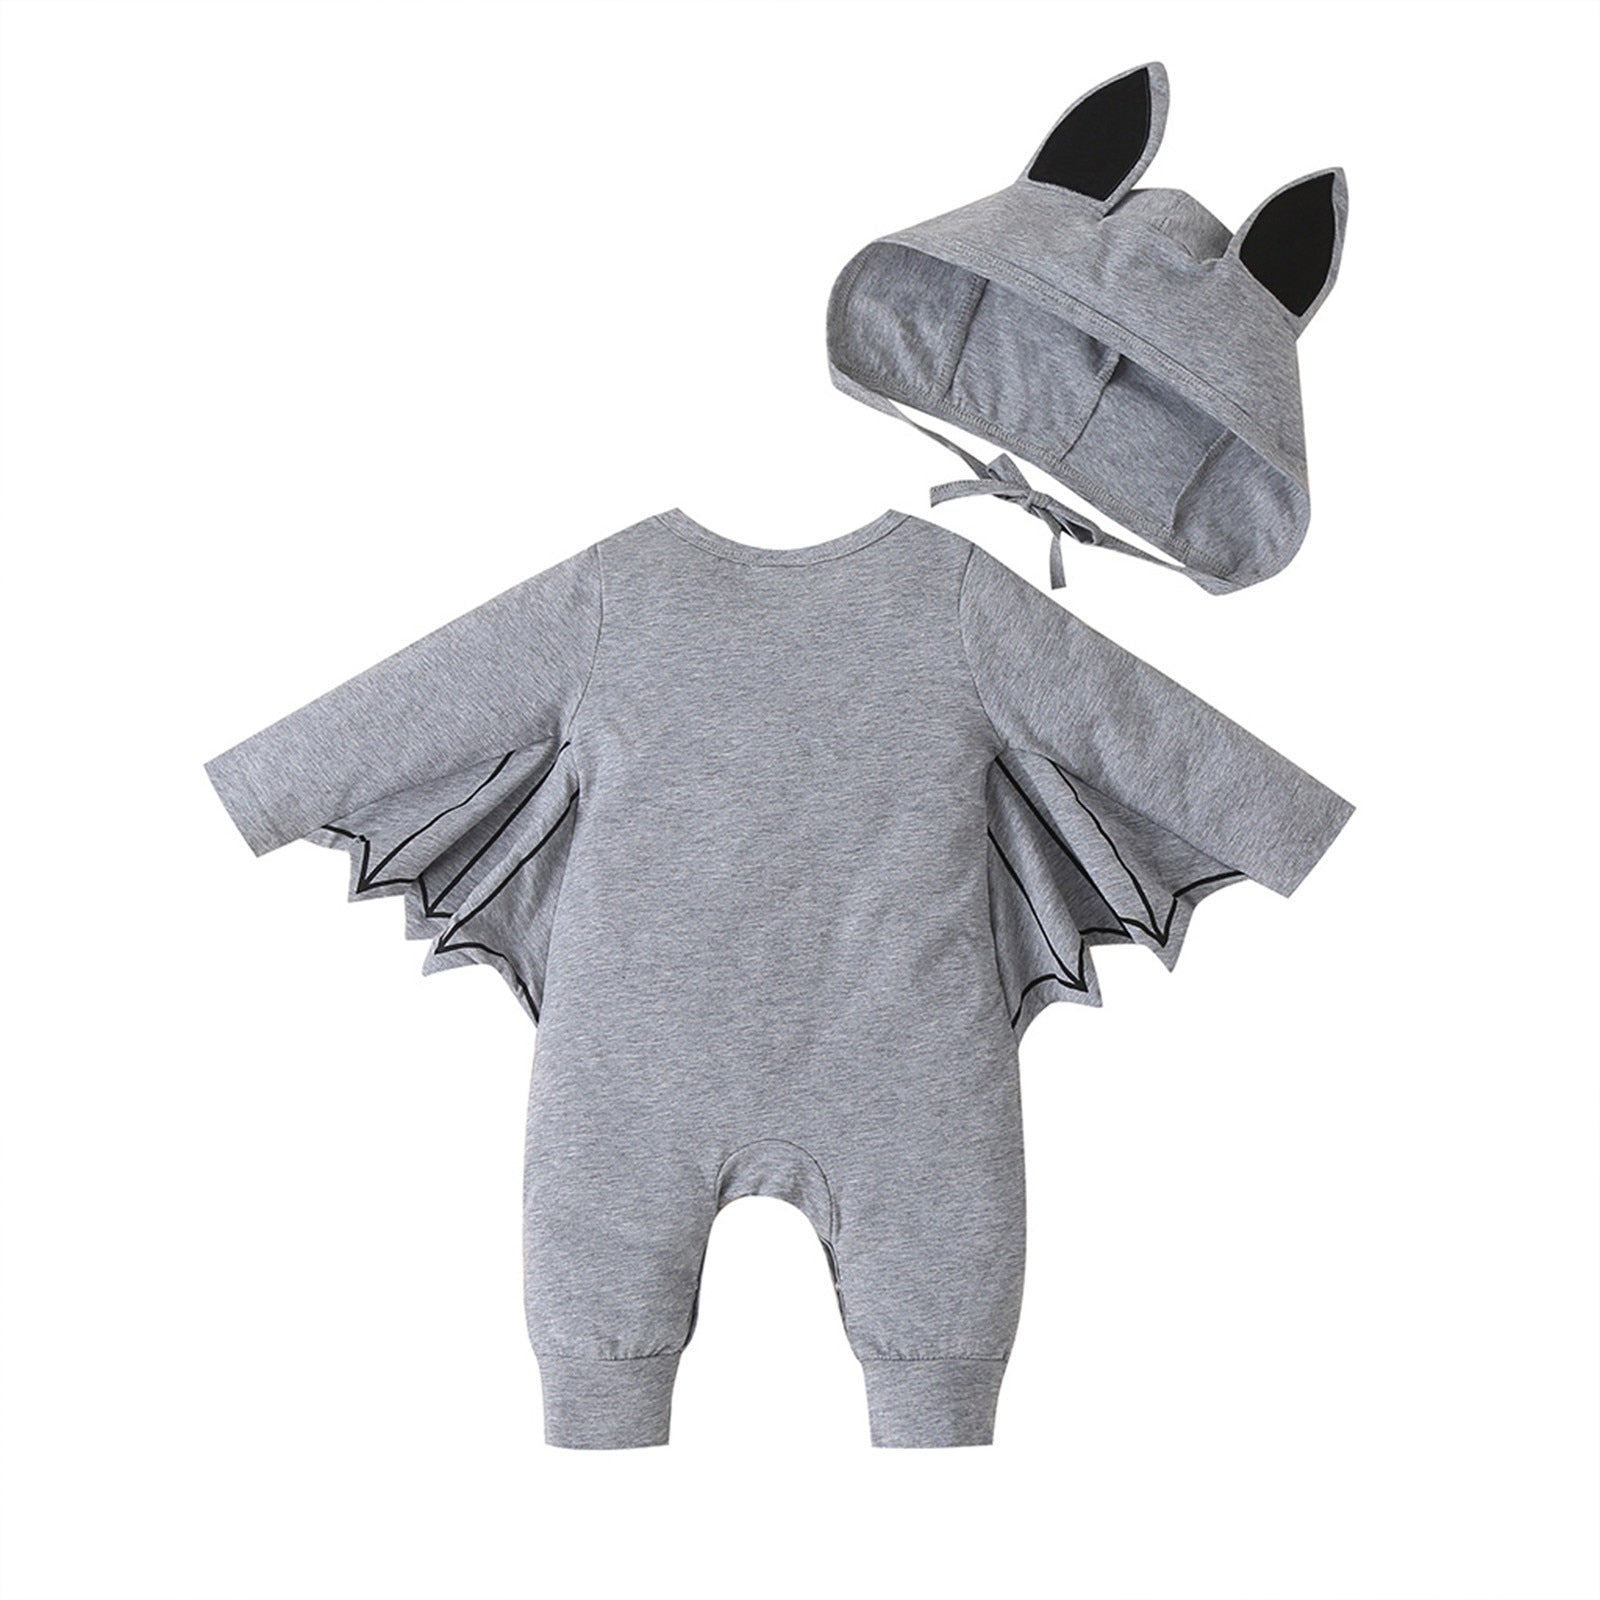 2PCS Halloween Costume Newborn infant Romper Cartoon Bat Jumpsuit Romper+ Hat Outfit